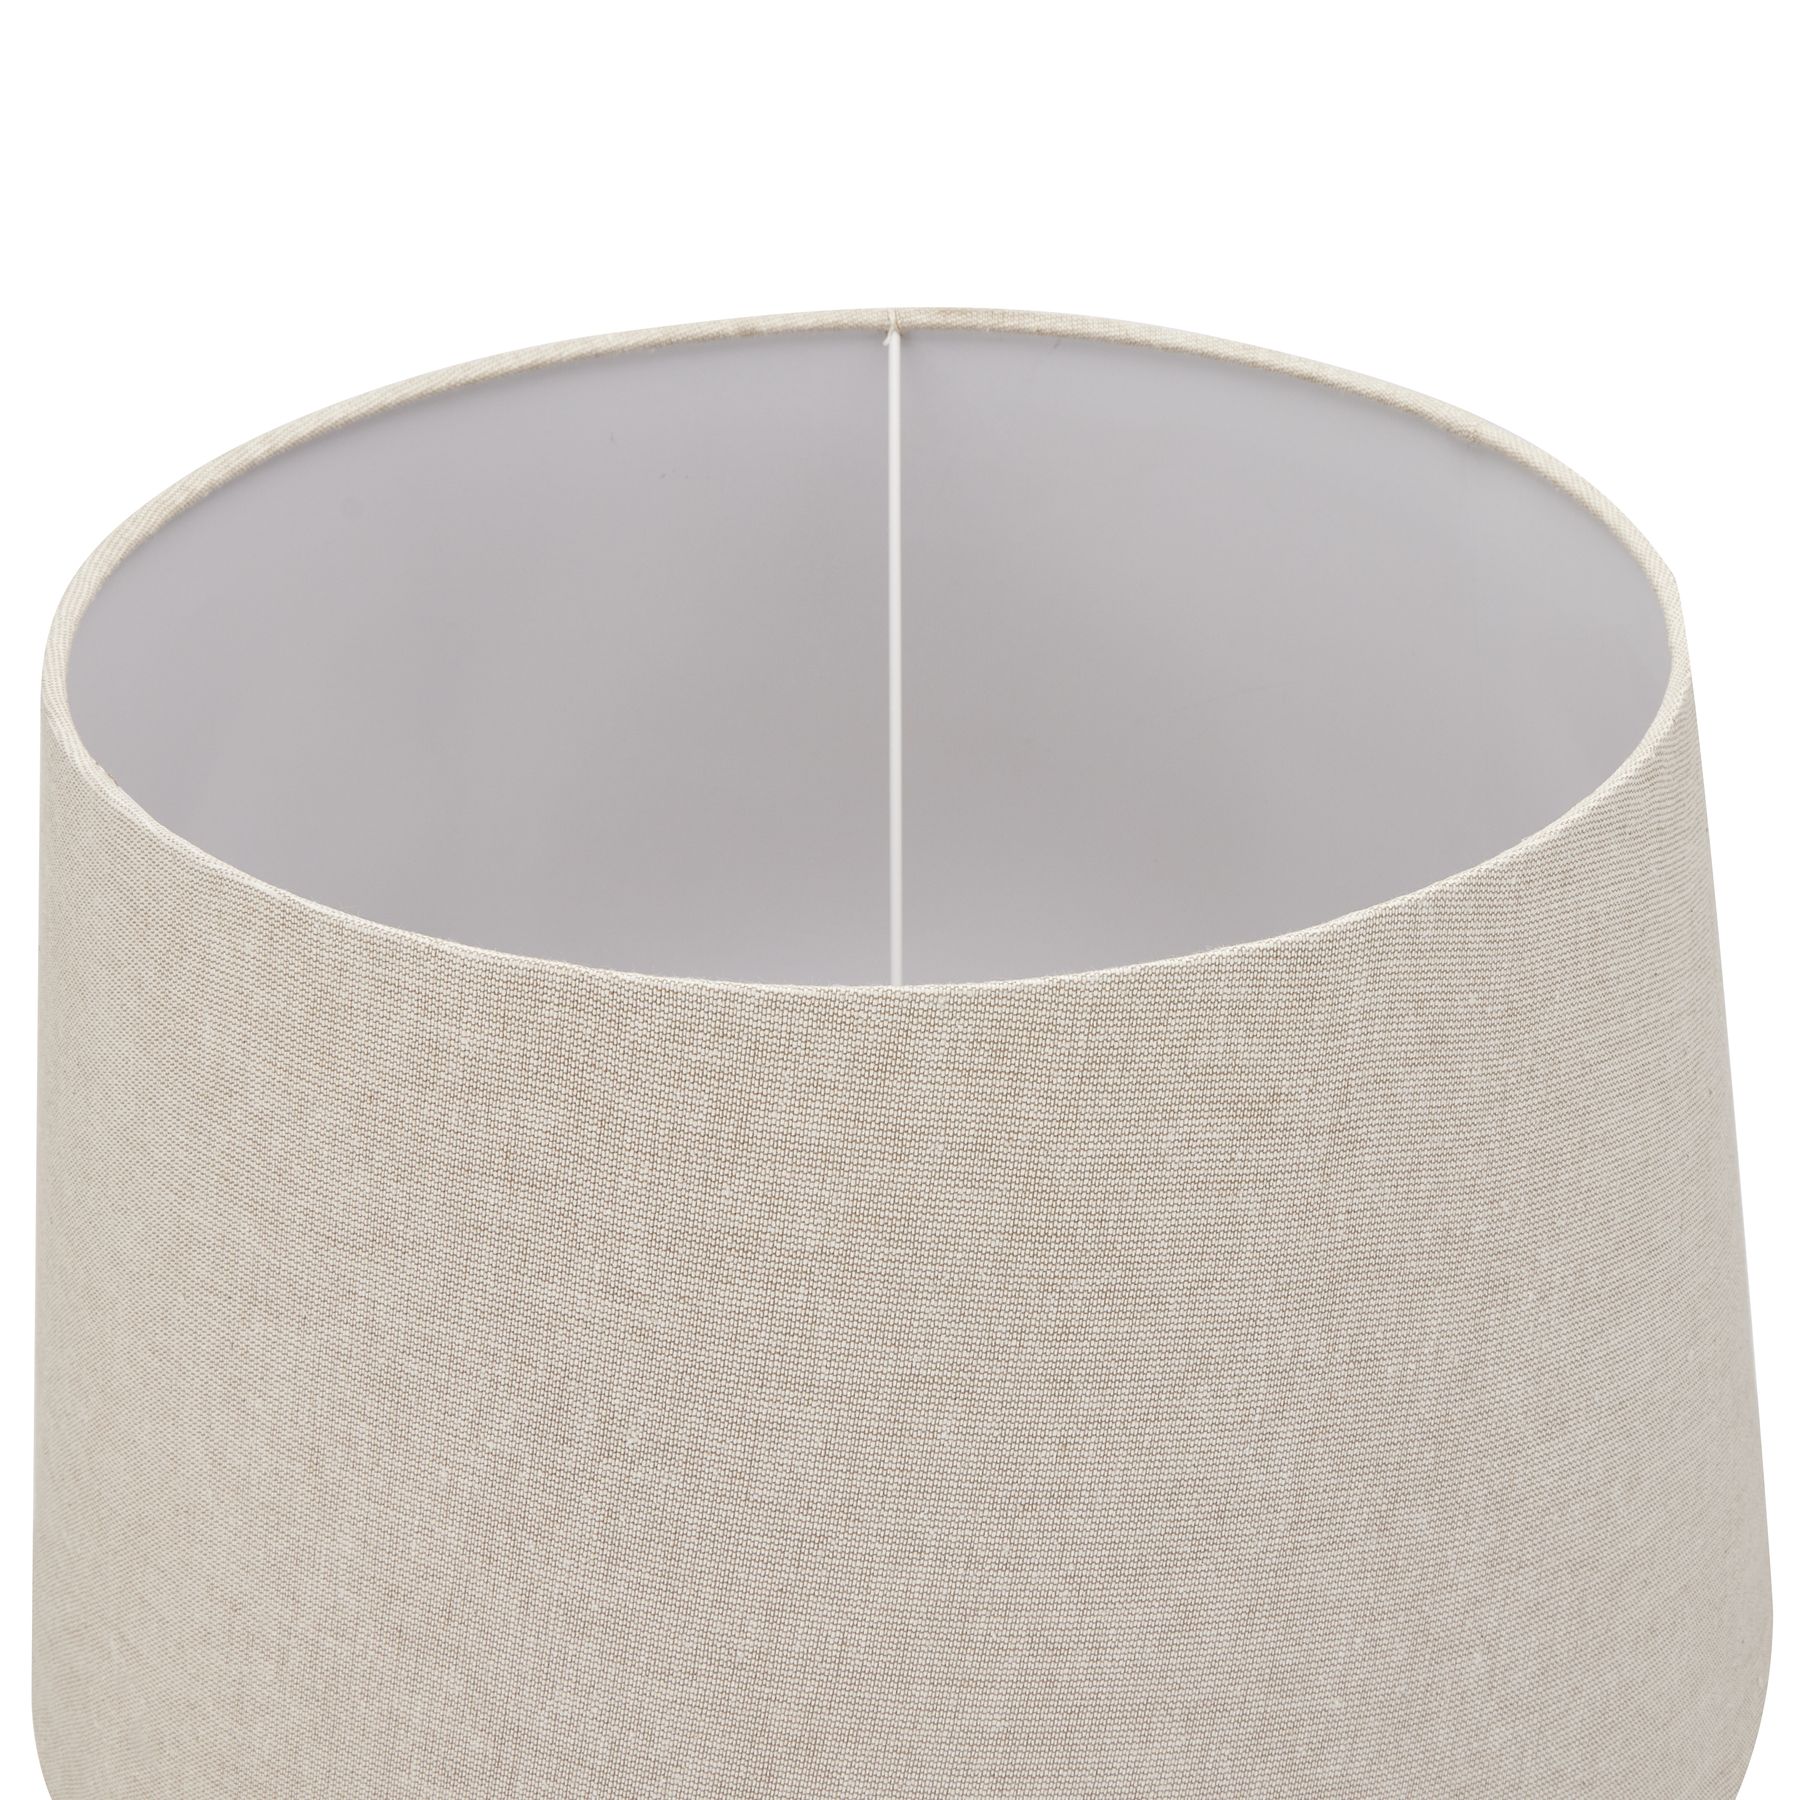 Delaney Natural Wash Urn Lamp With Linen Shade - Image 3